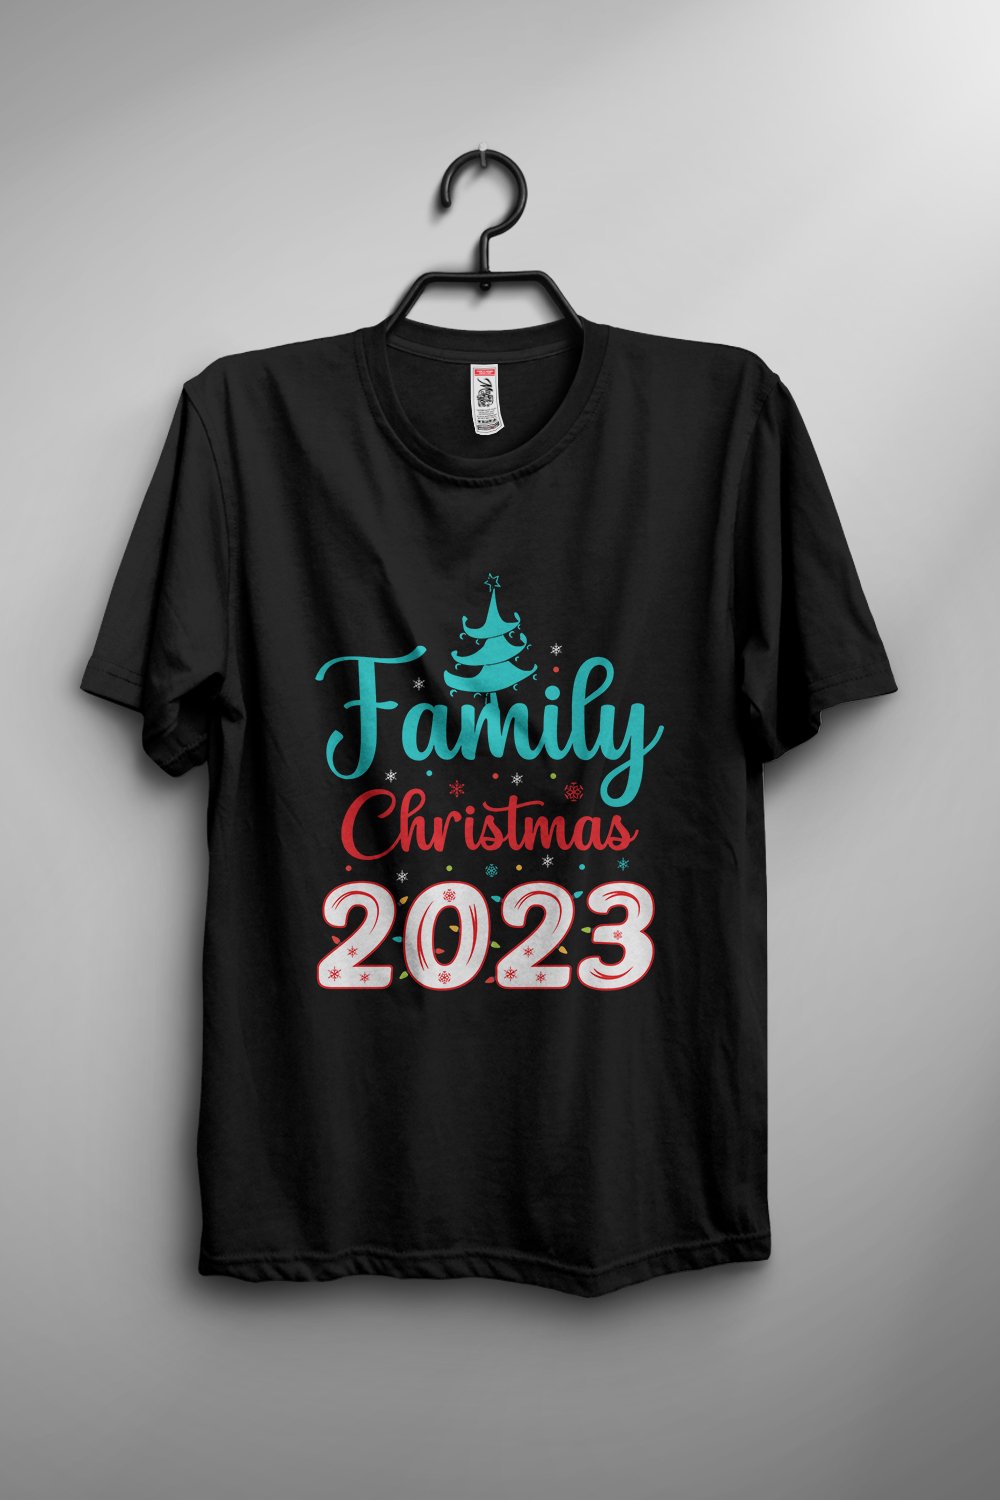 Family Christmas 2023 T-shirt design pinterest preview image.